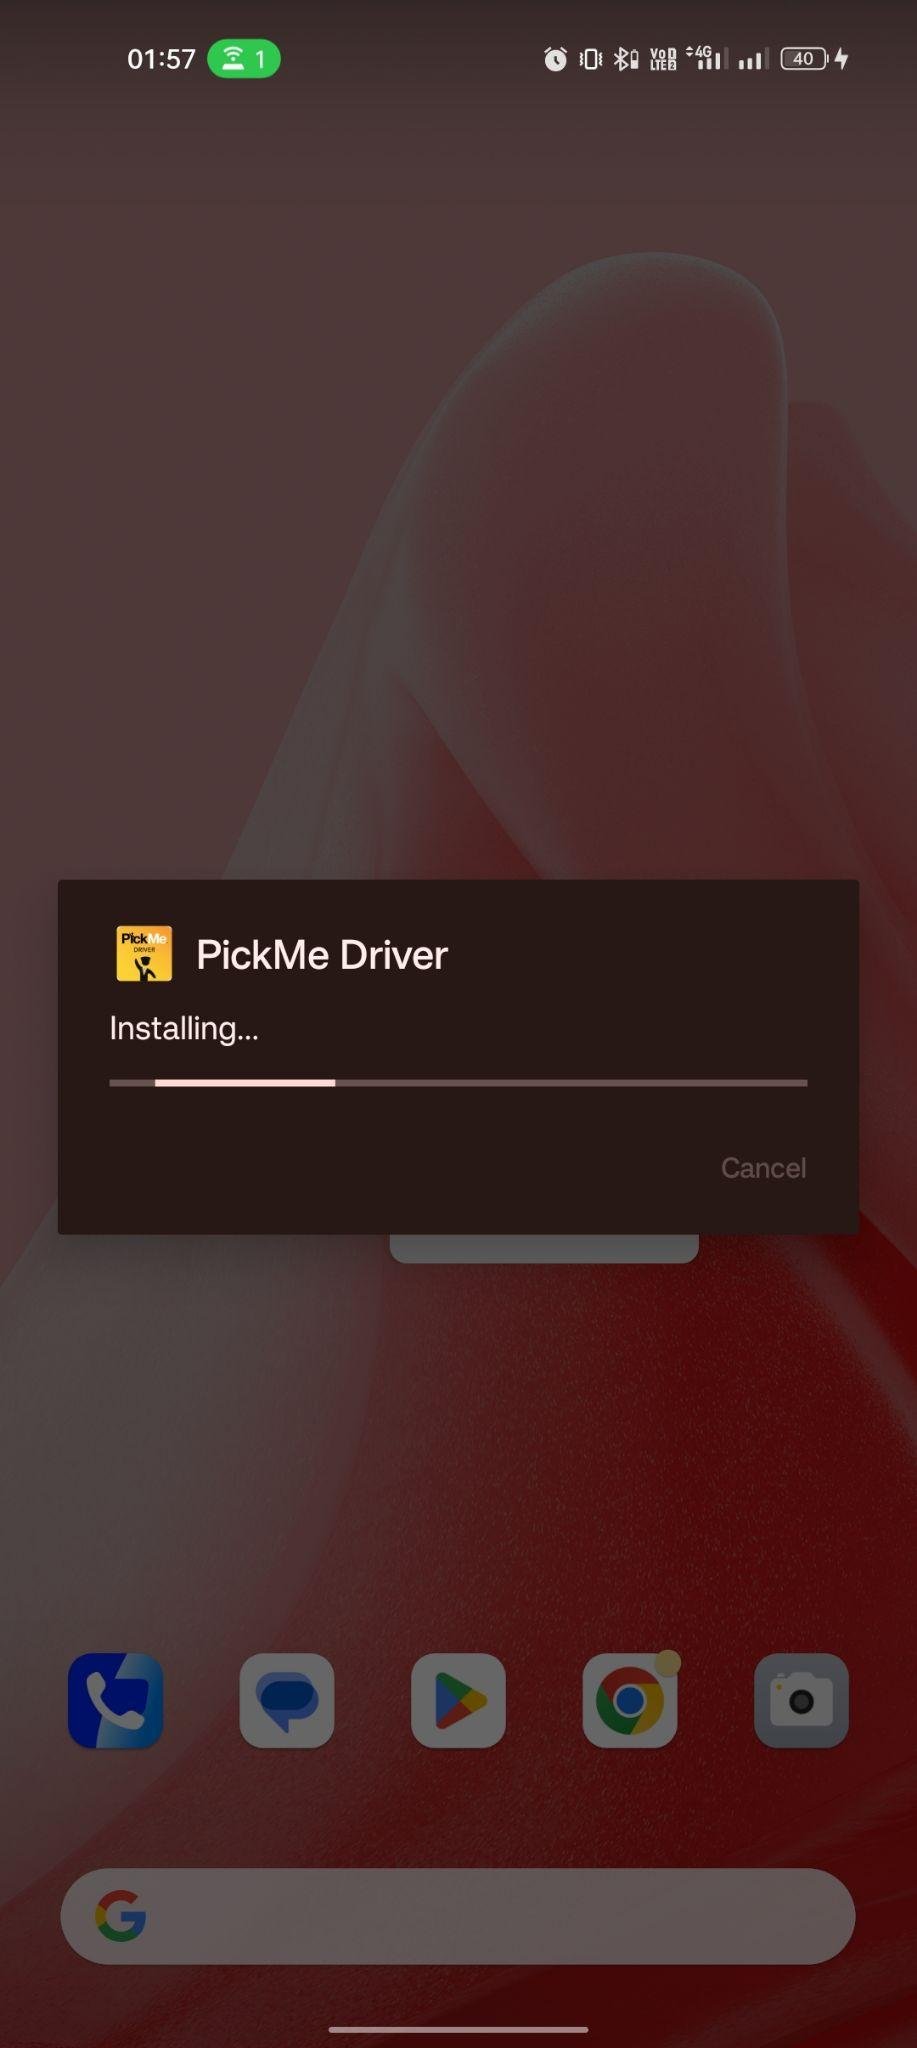 PickMe Driver apk installing